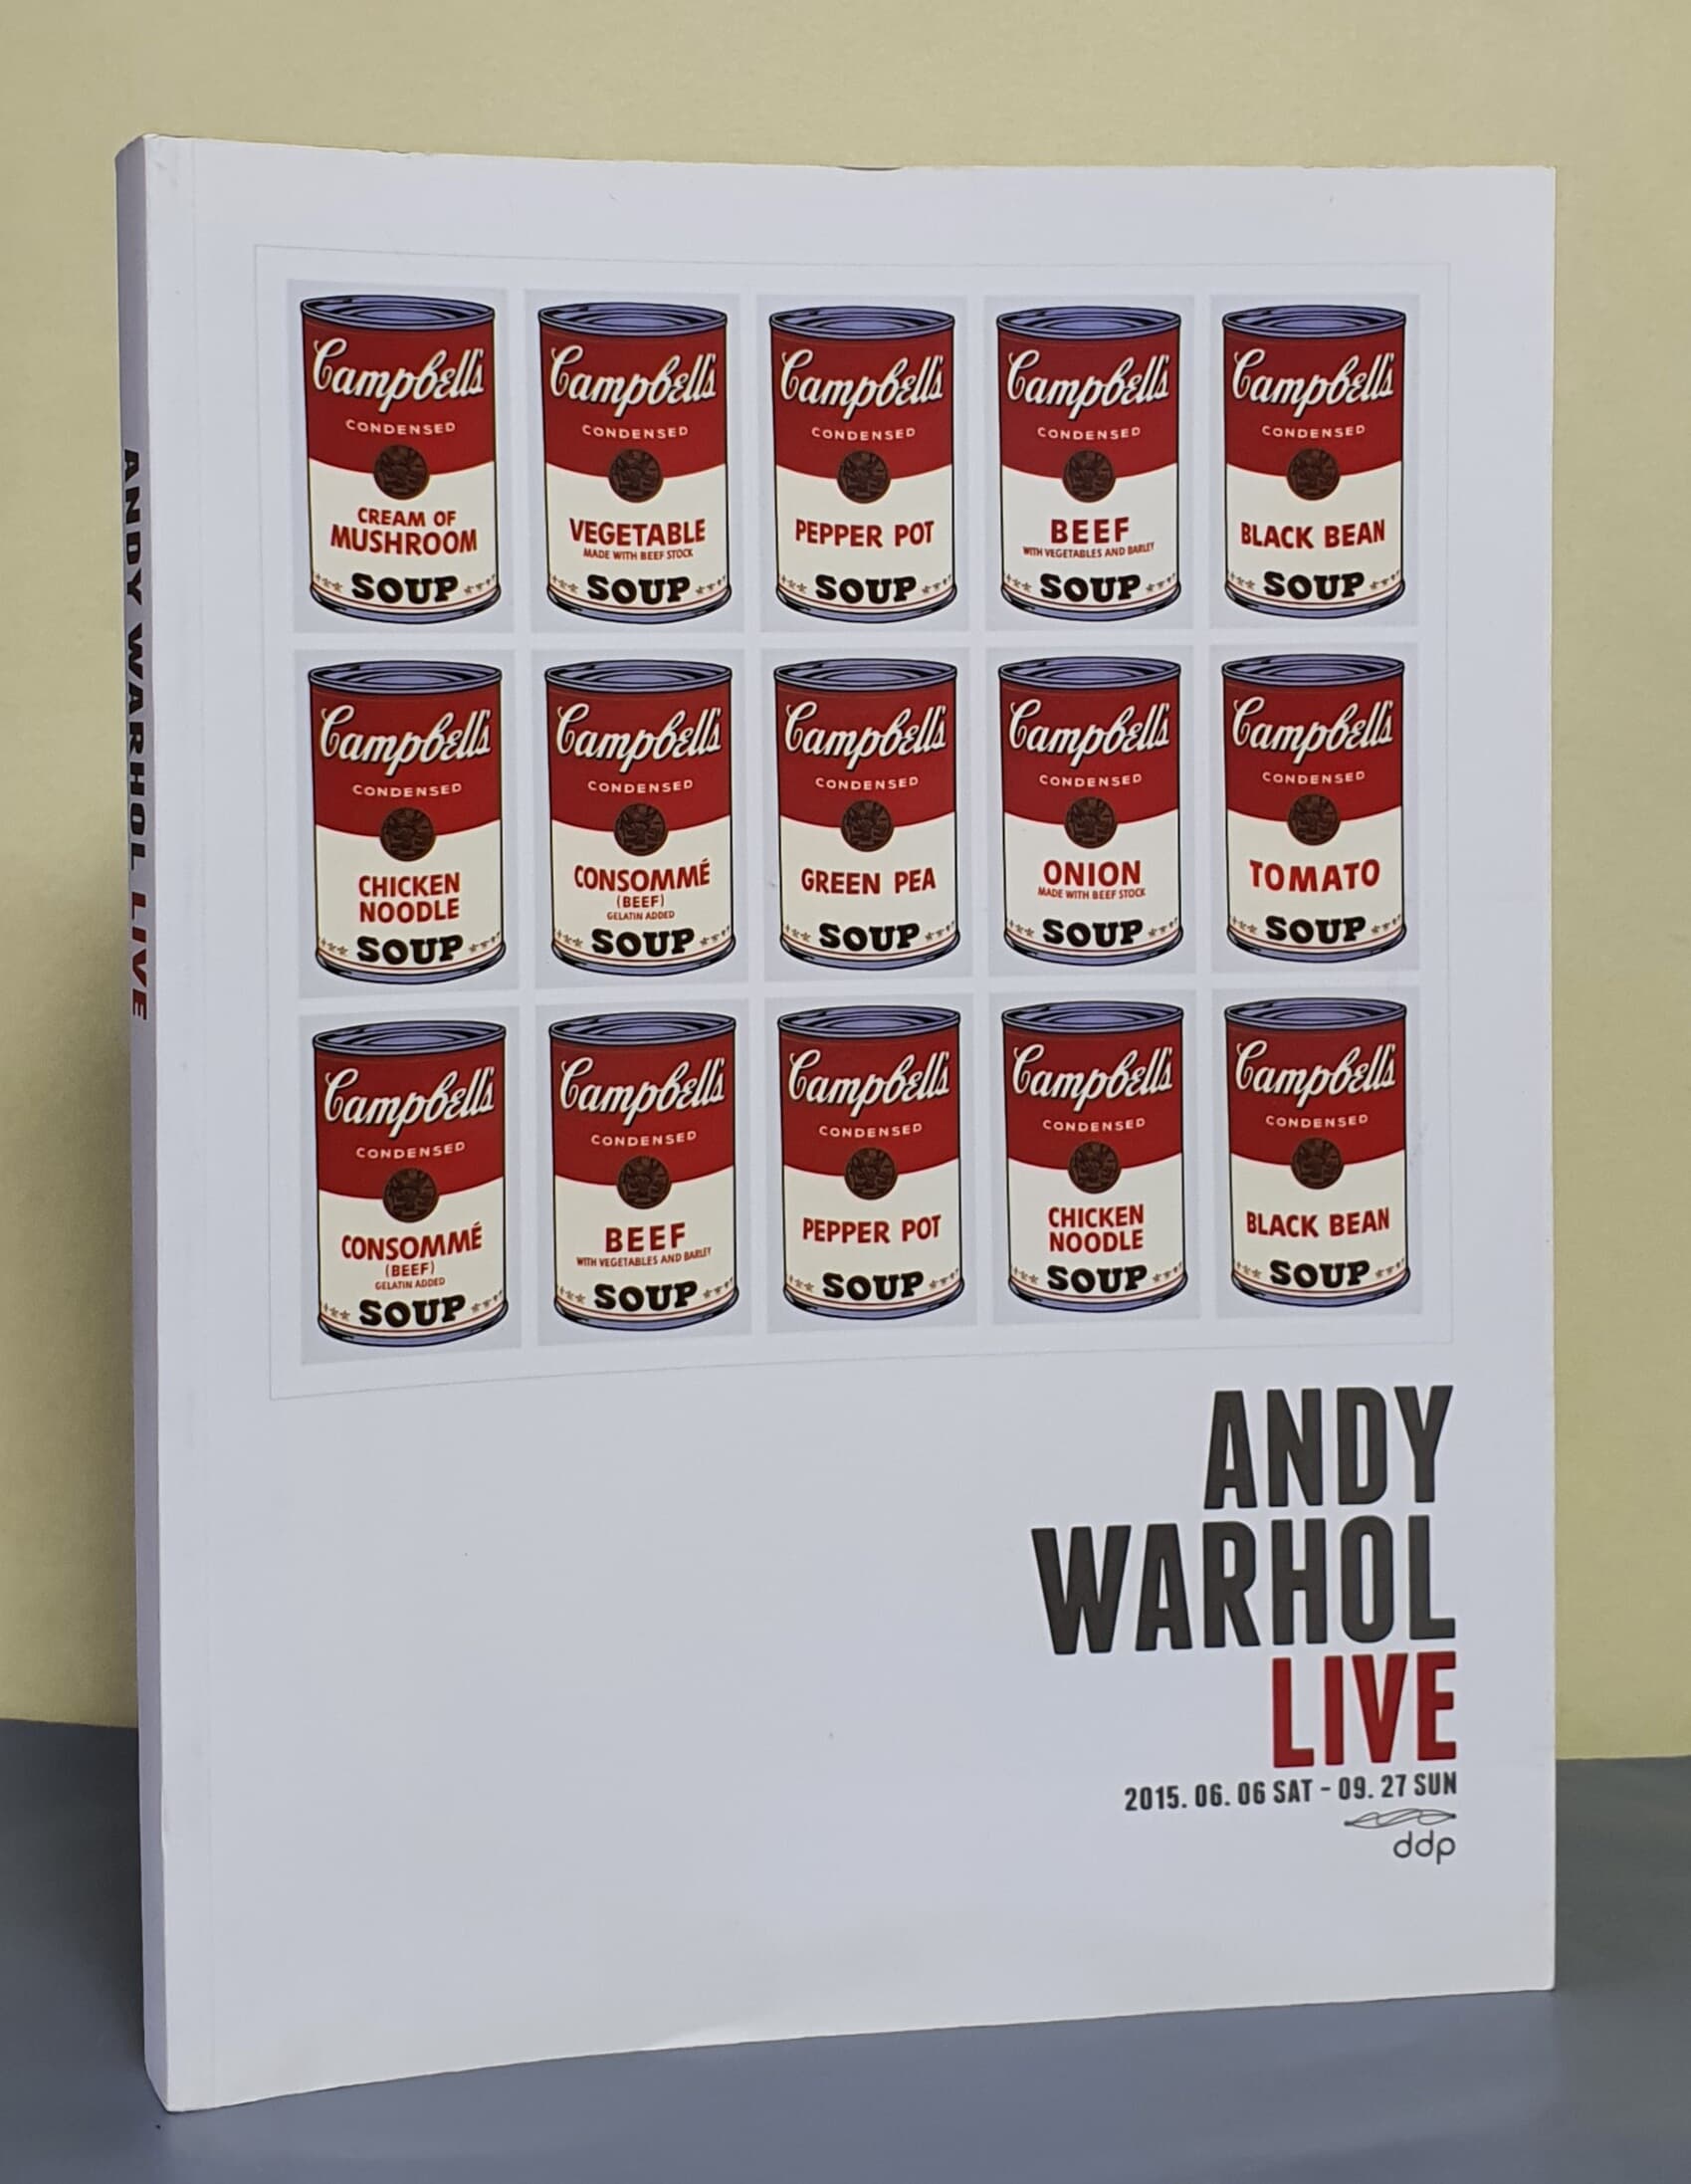 ANDY WARHOL LIVE - 2015.06.06 SAT~09.27 SUN